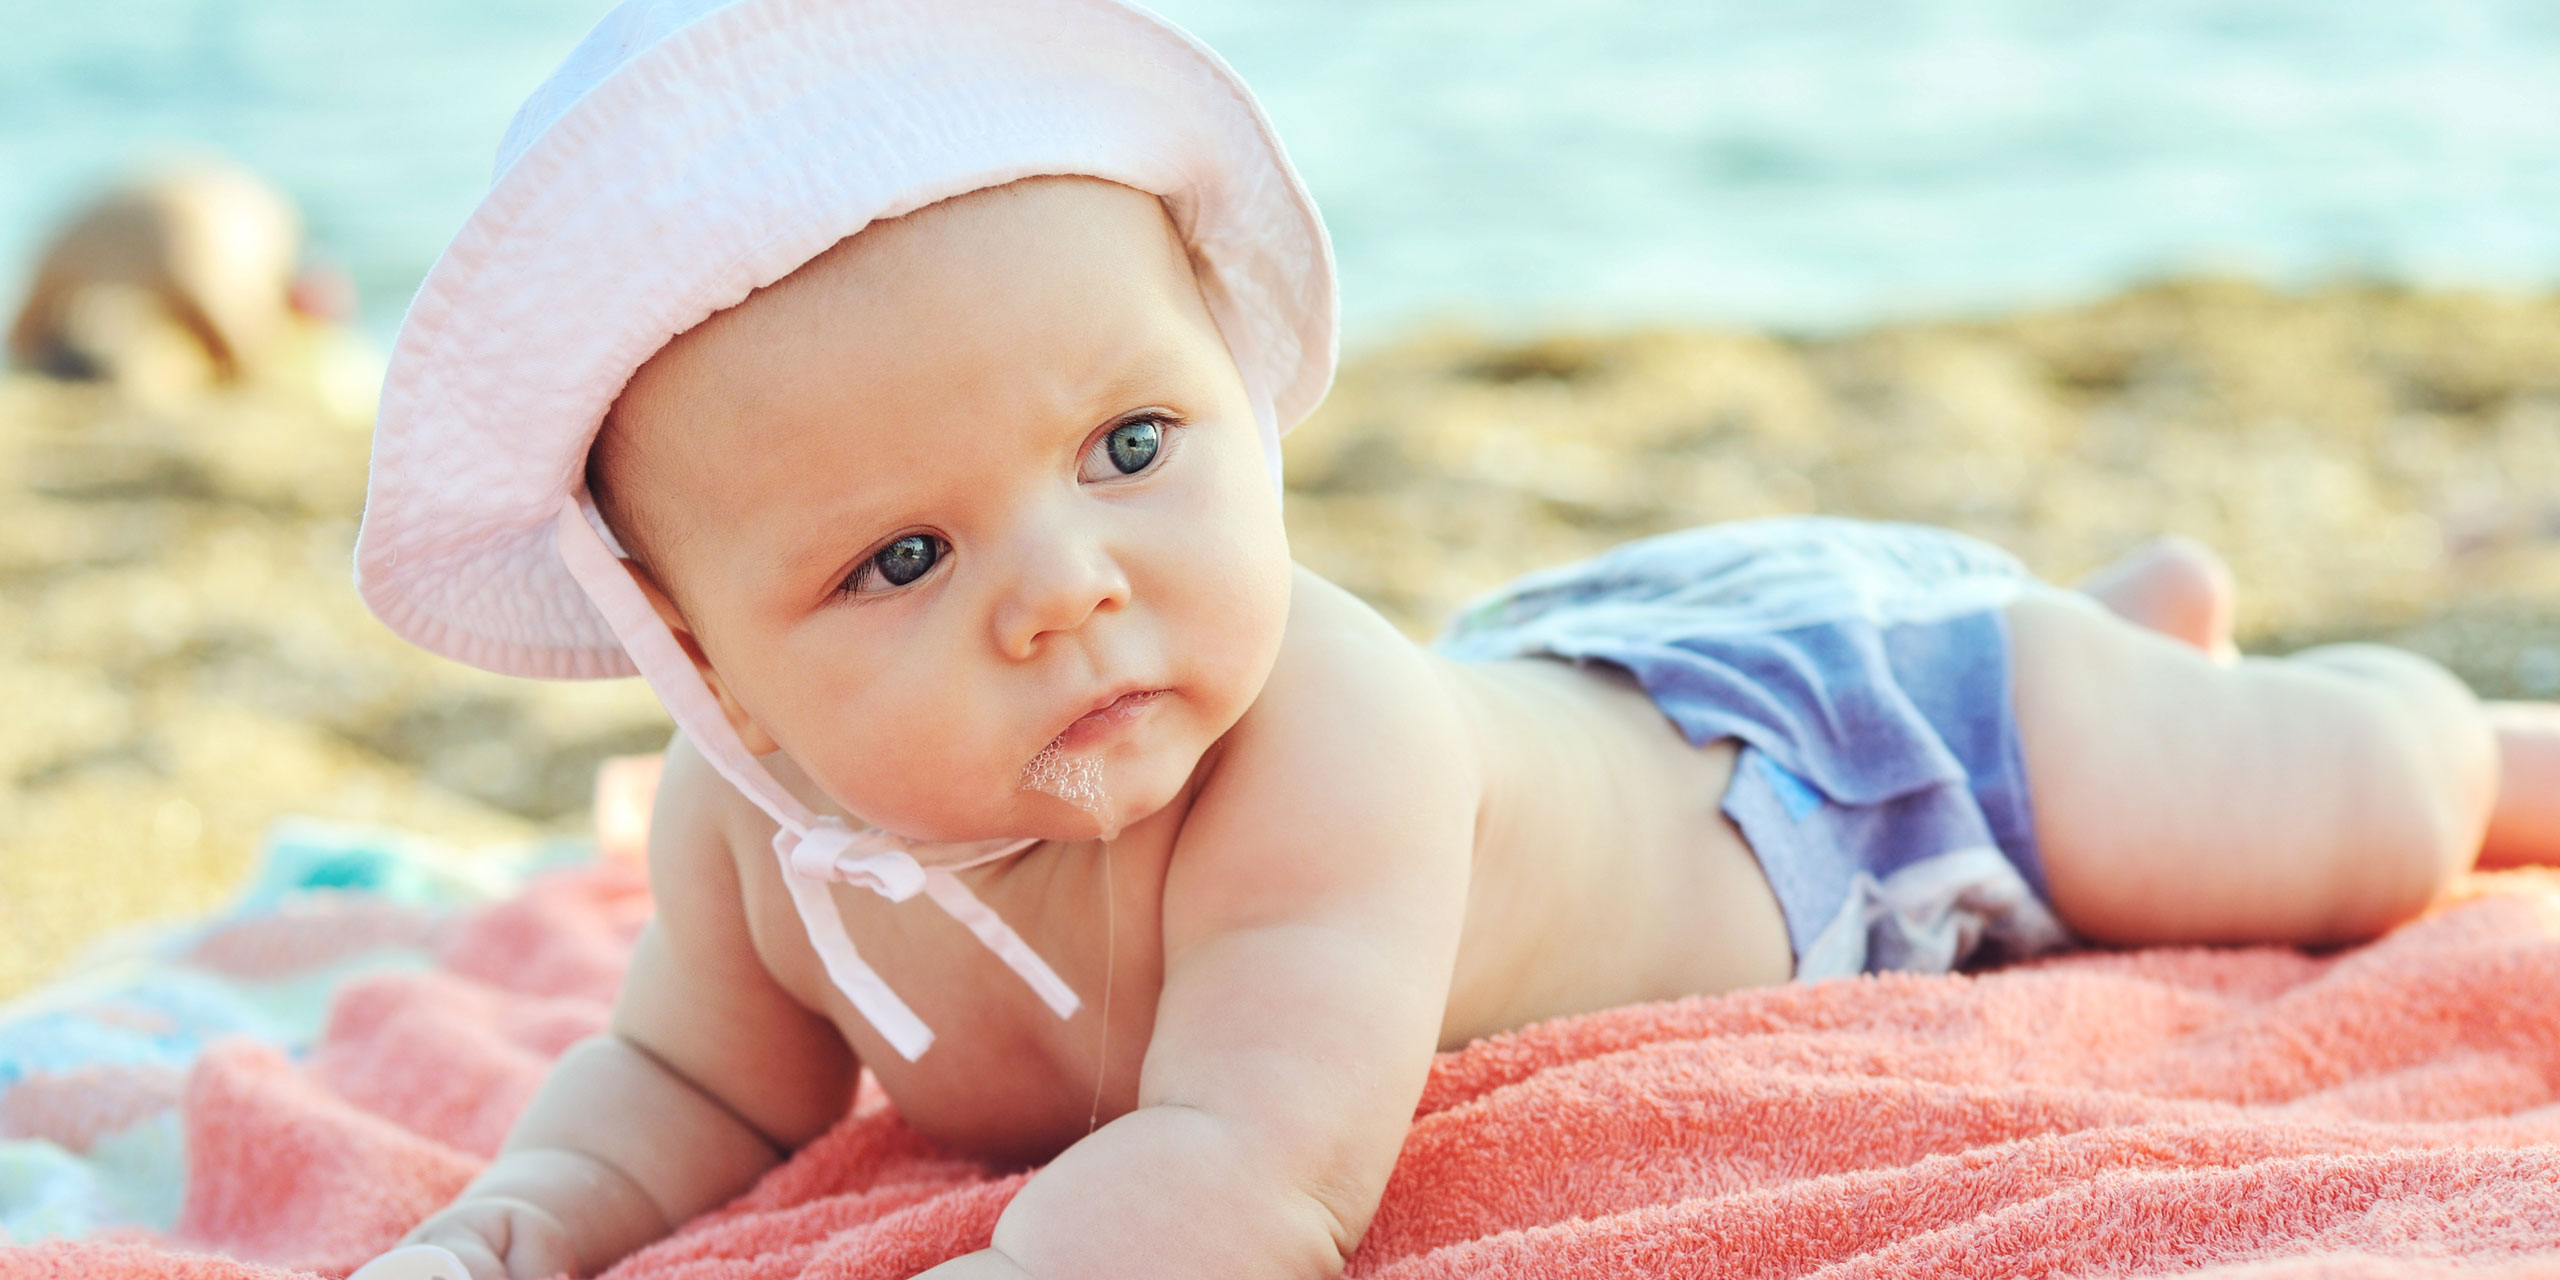 Baby on Beach; Courtesy of Elena Stepanova/Shutterstock.com